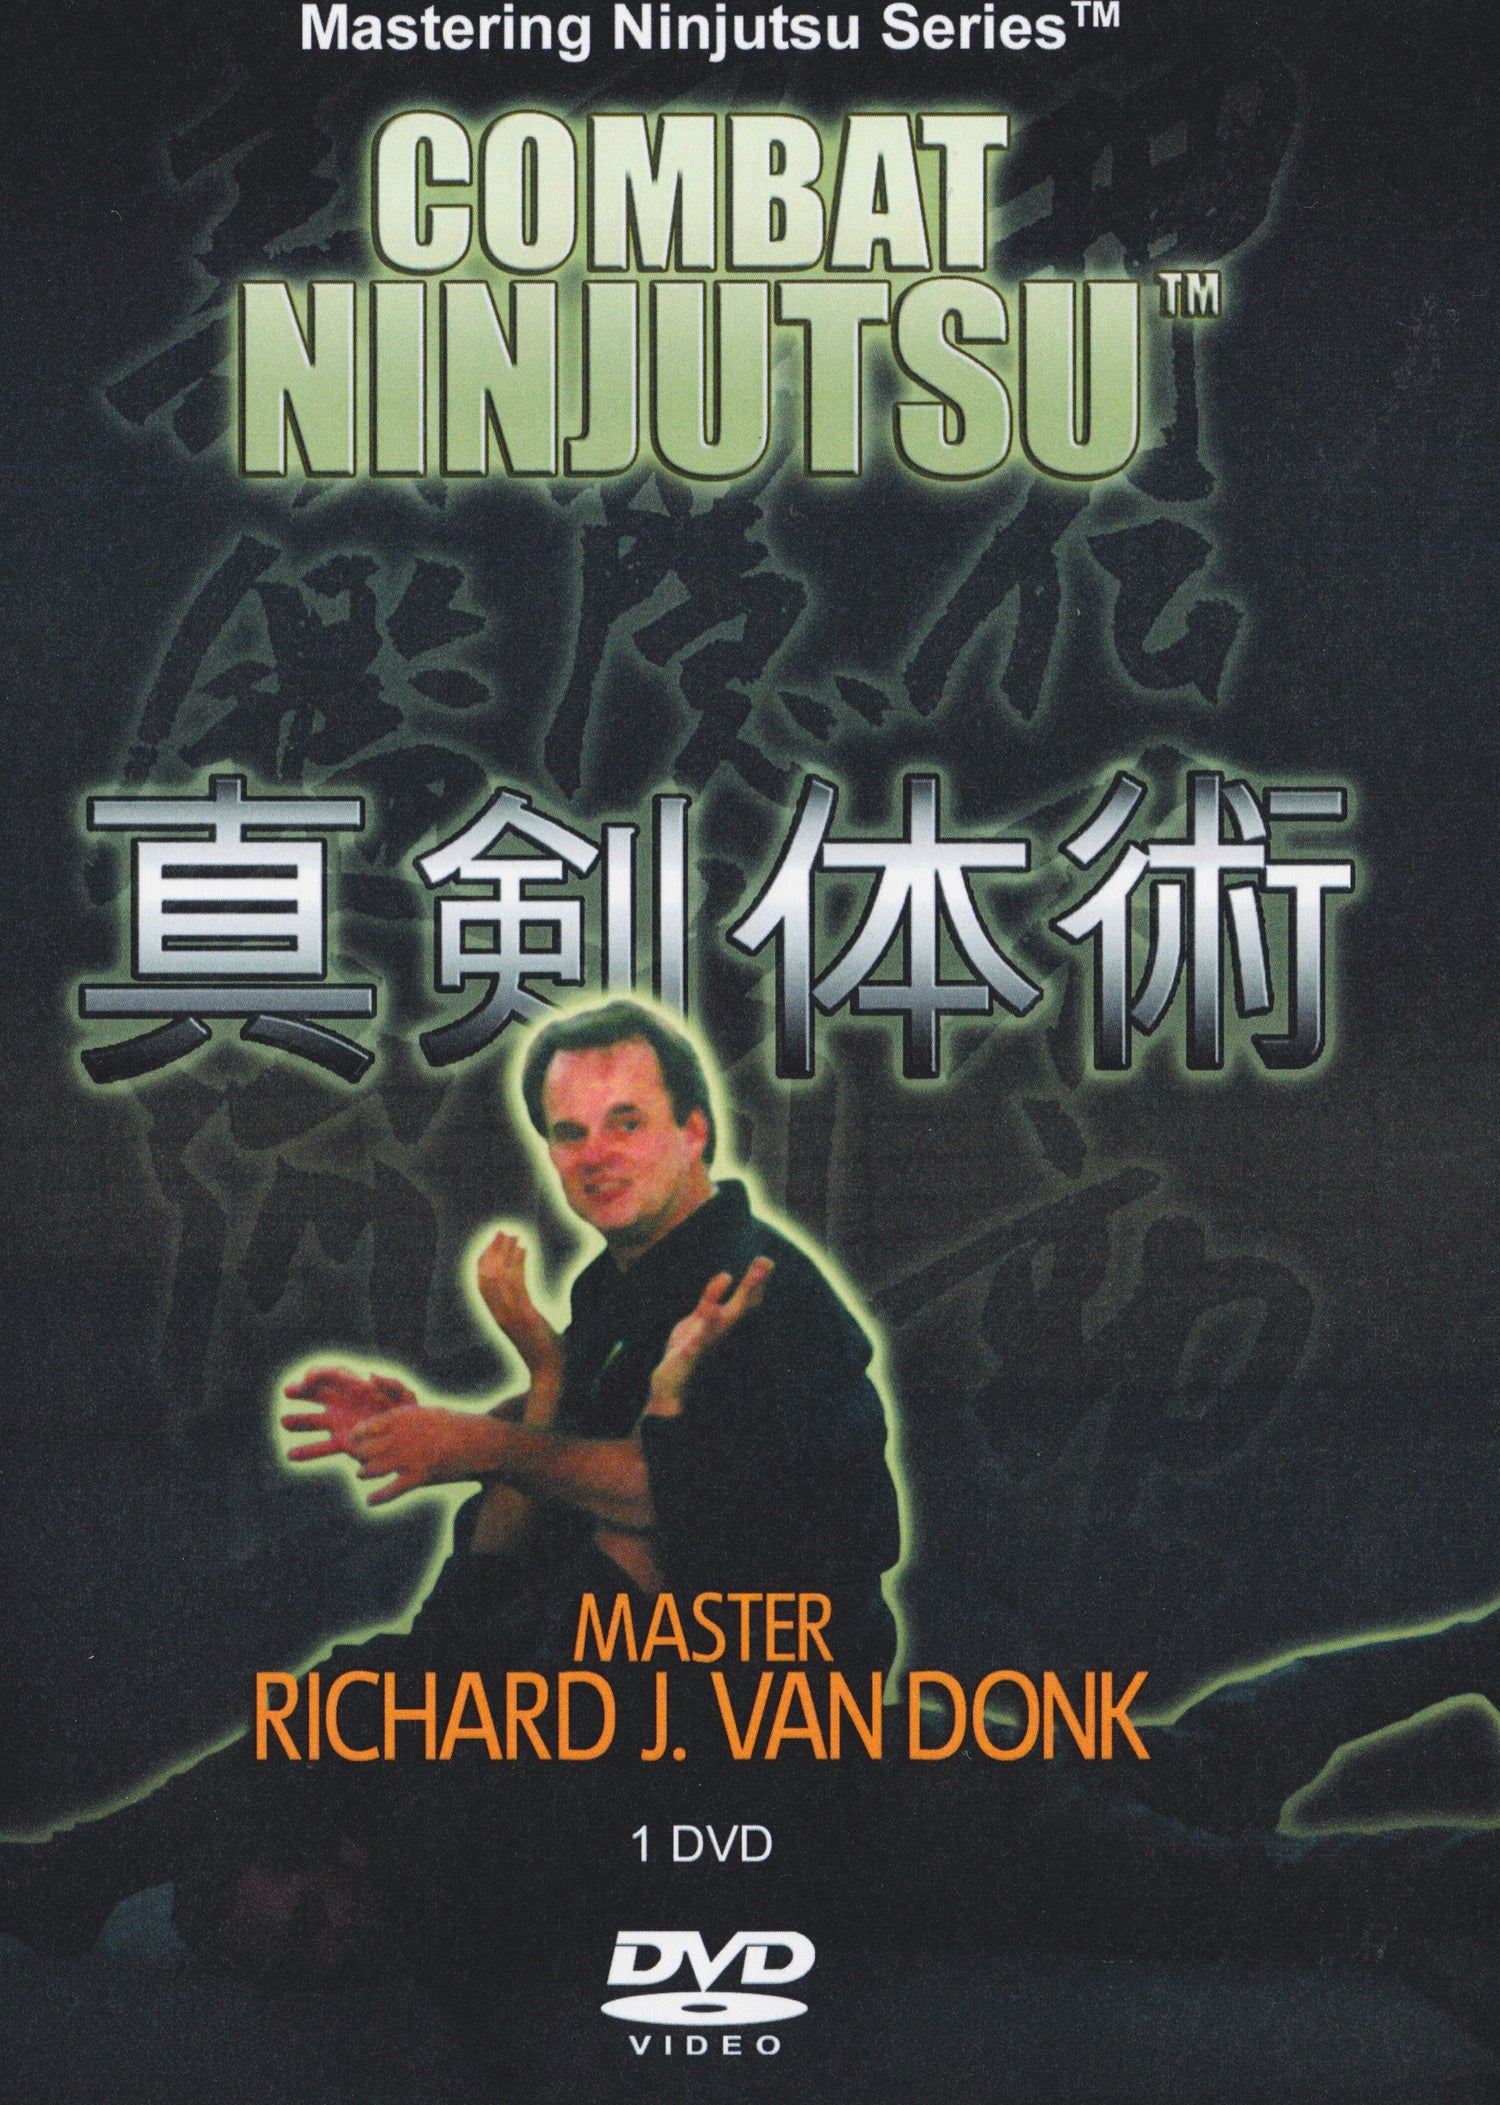 Combat Ninjutsu DVD by Richard Van Donk